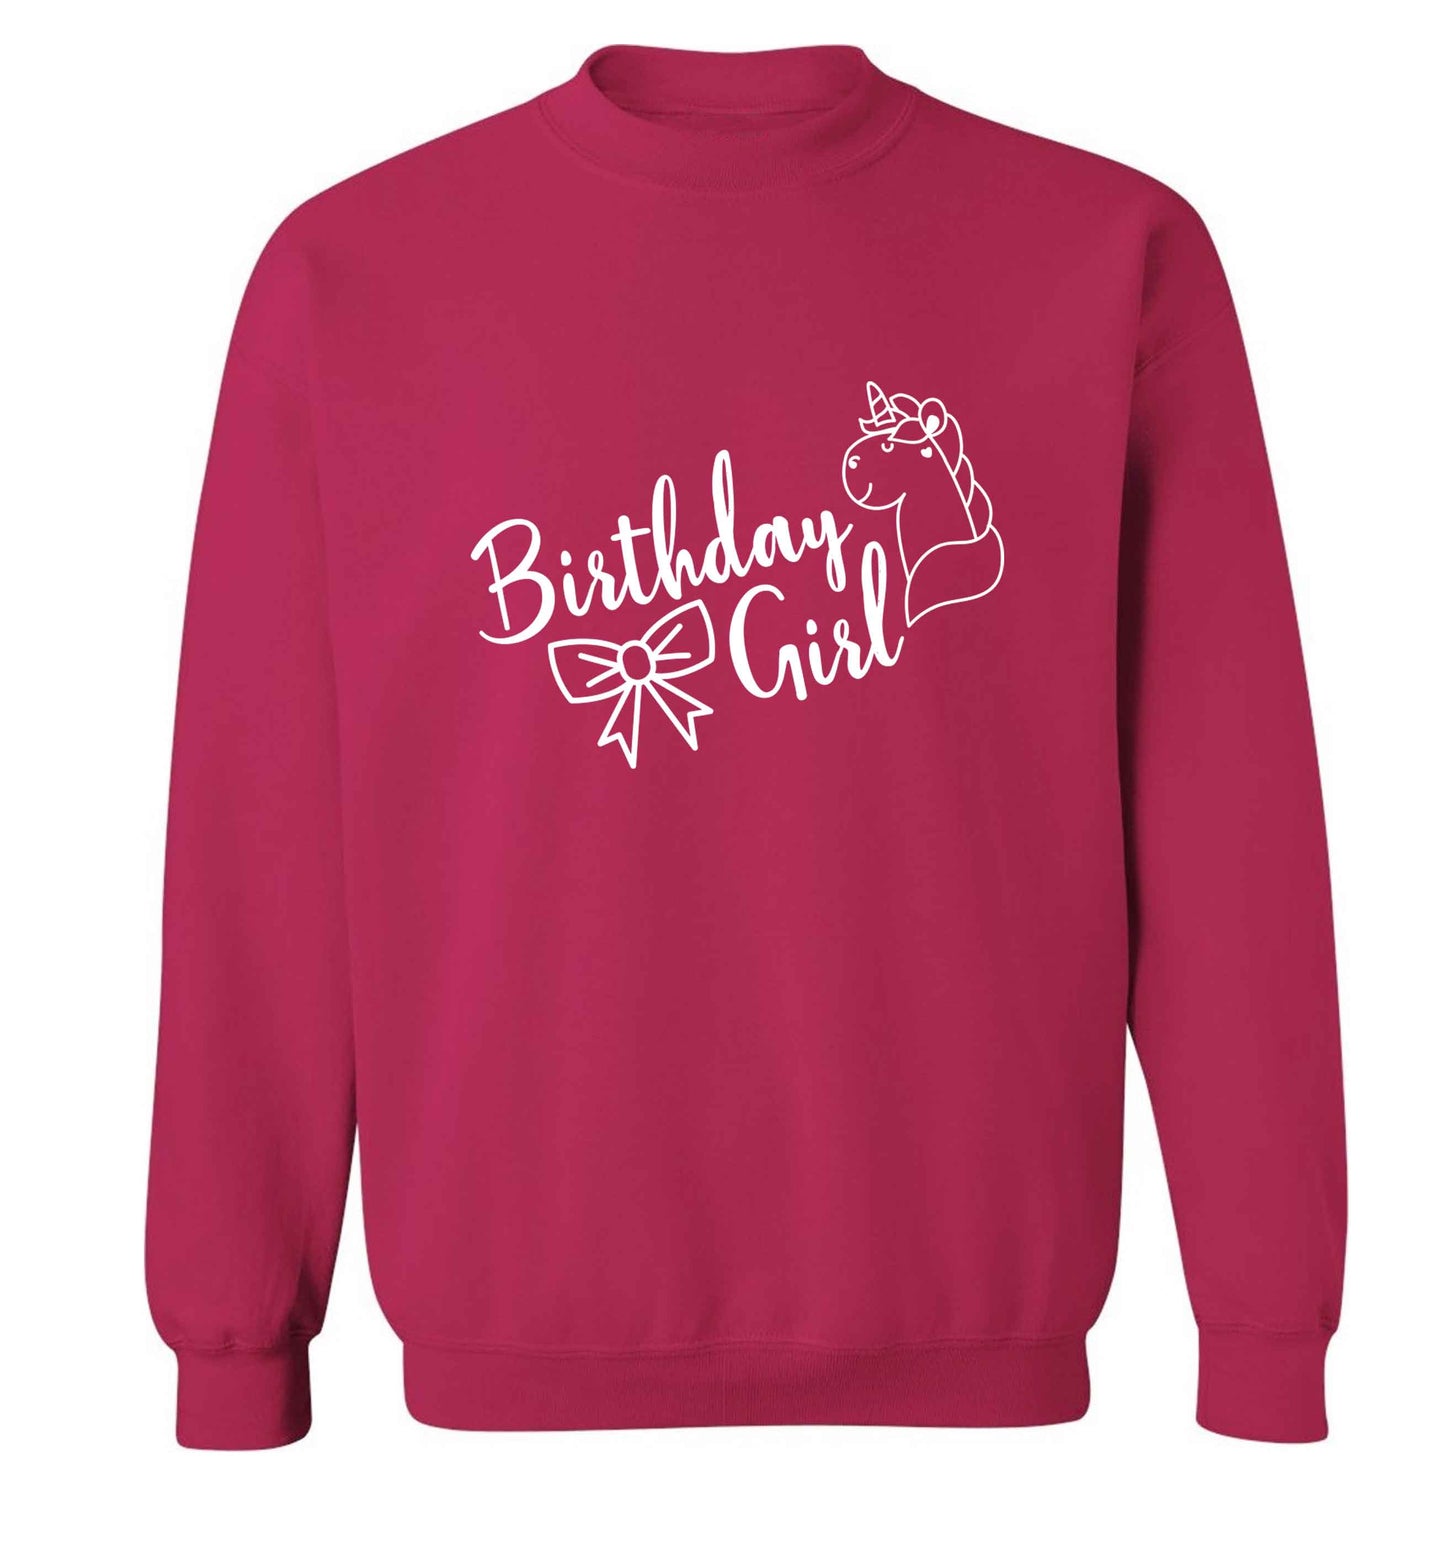 Birthday girl adult's unisex pink sweater 2XL